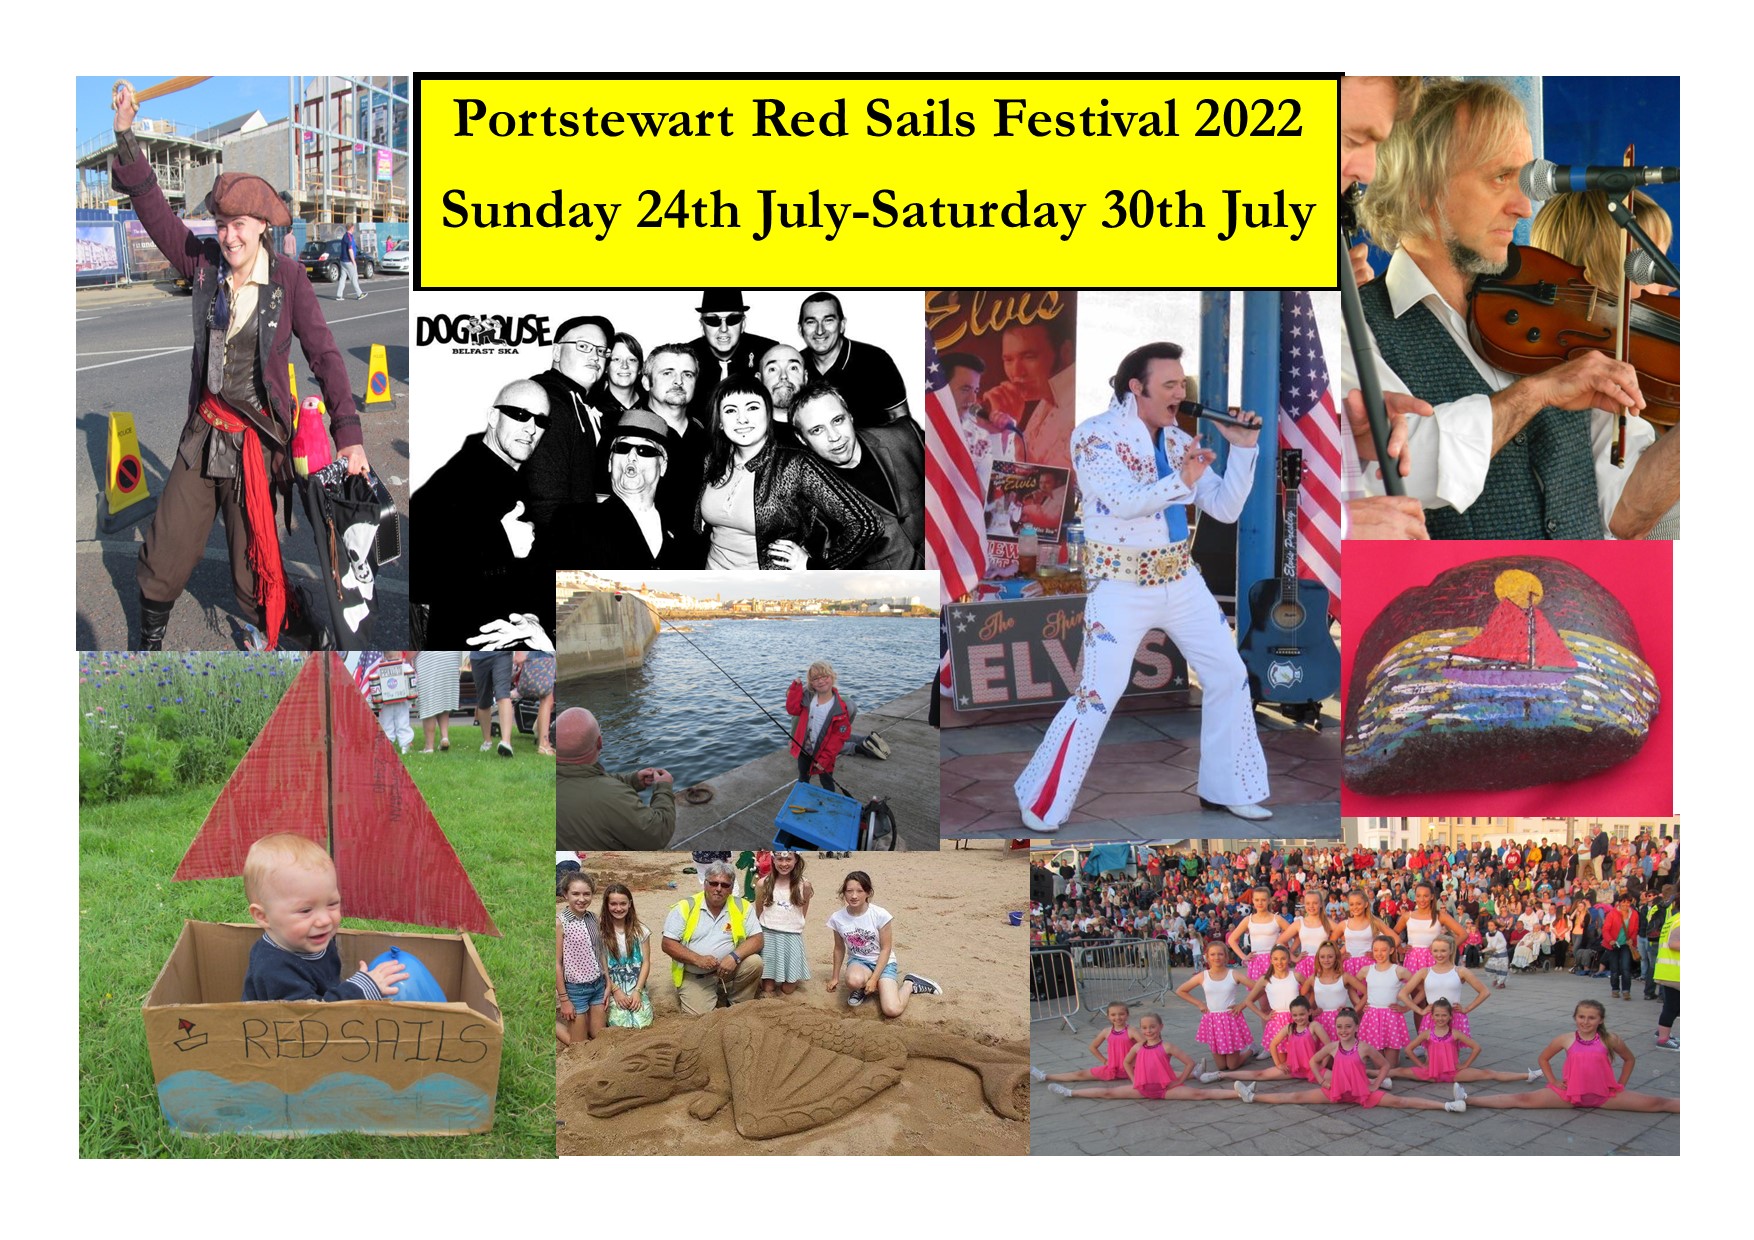 Image for event Portstewart Red Sails Festival 2022